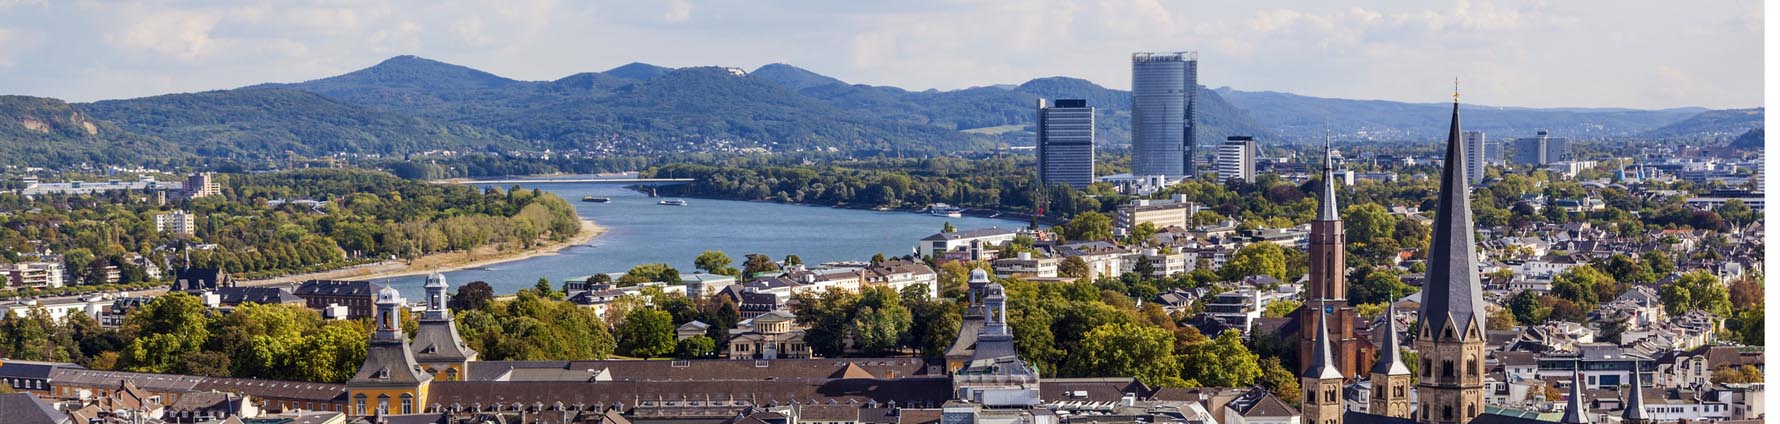 Stadtwerke Bonn case study header